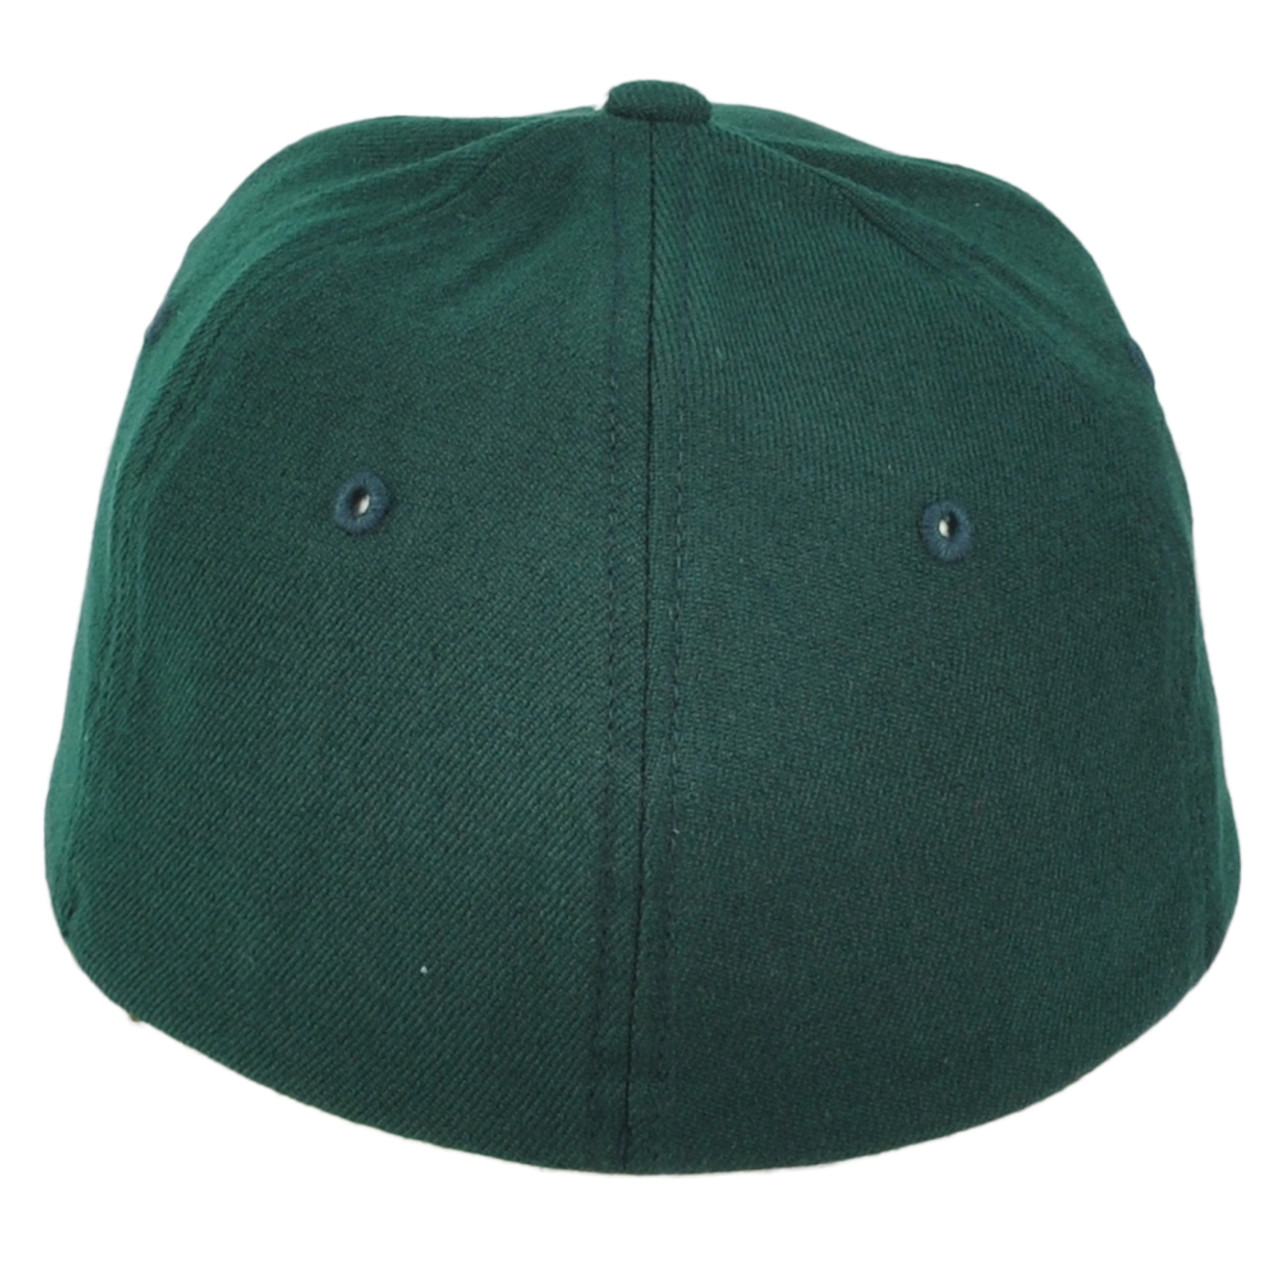 Dark Cap Bill Fit Stretch Forest Flex Zephyr Blank - Flat Hat Store Cap Green Medium/Large